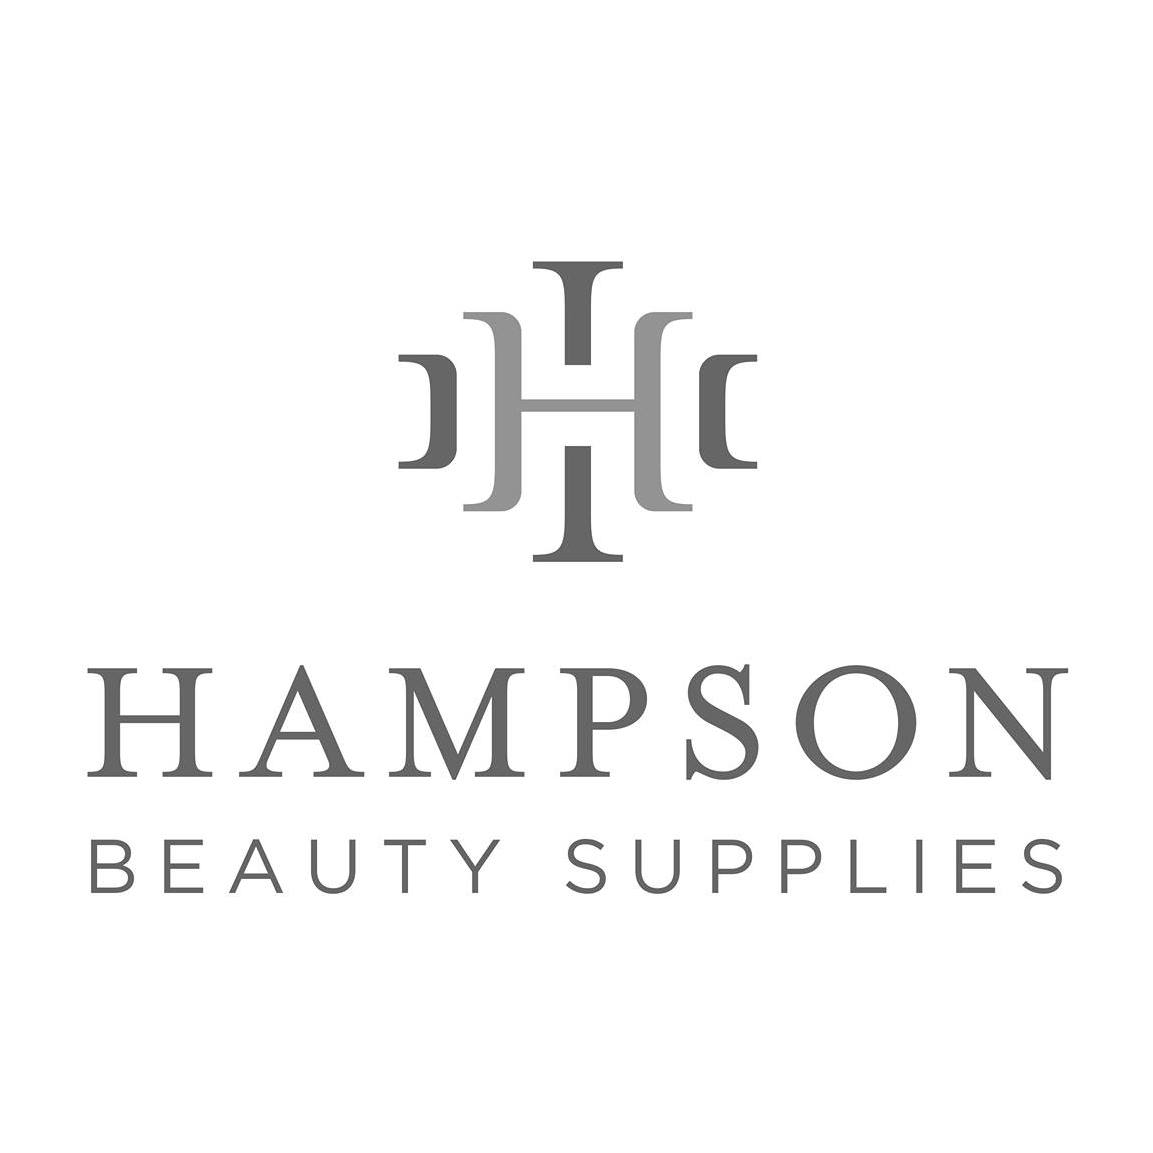 Hampson Beauty Supplies logo